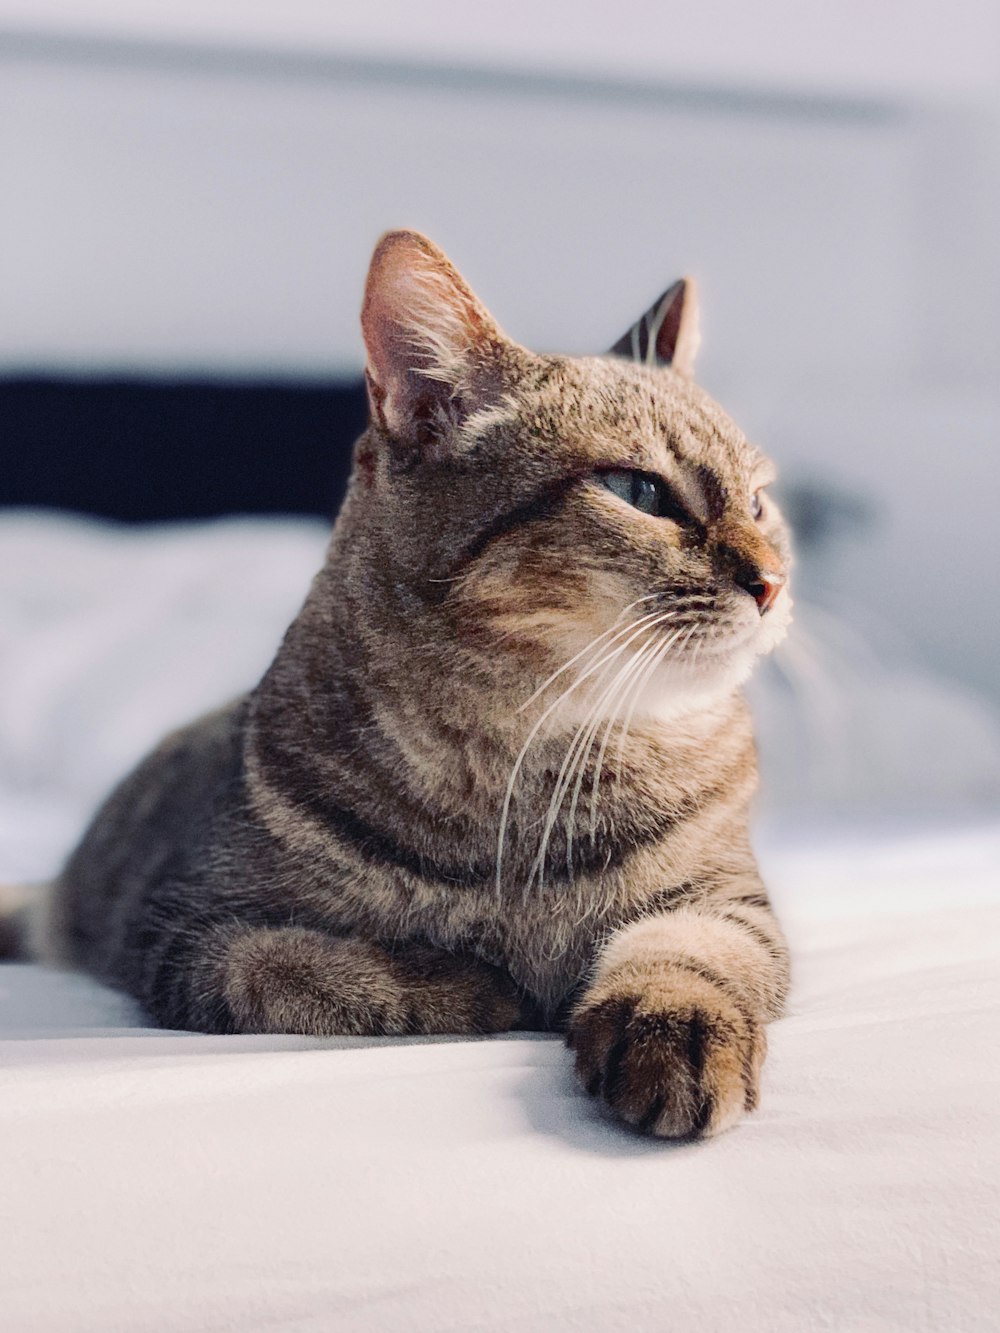 focus photography of cat sitting on mattress